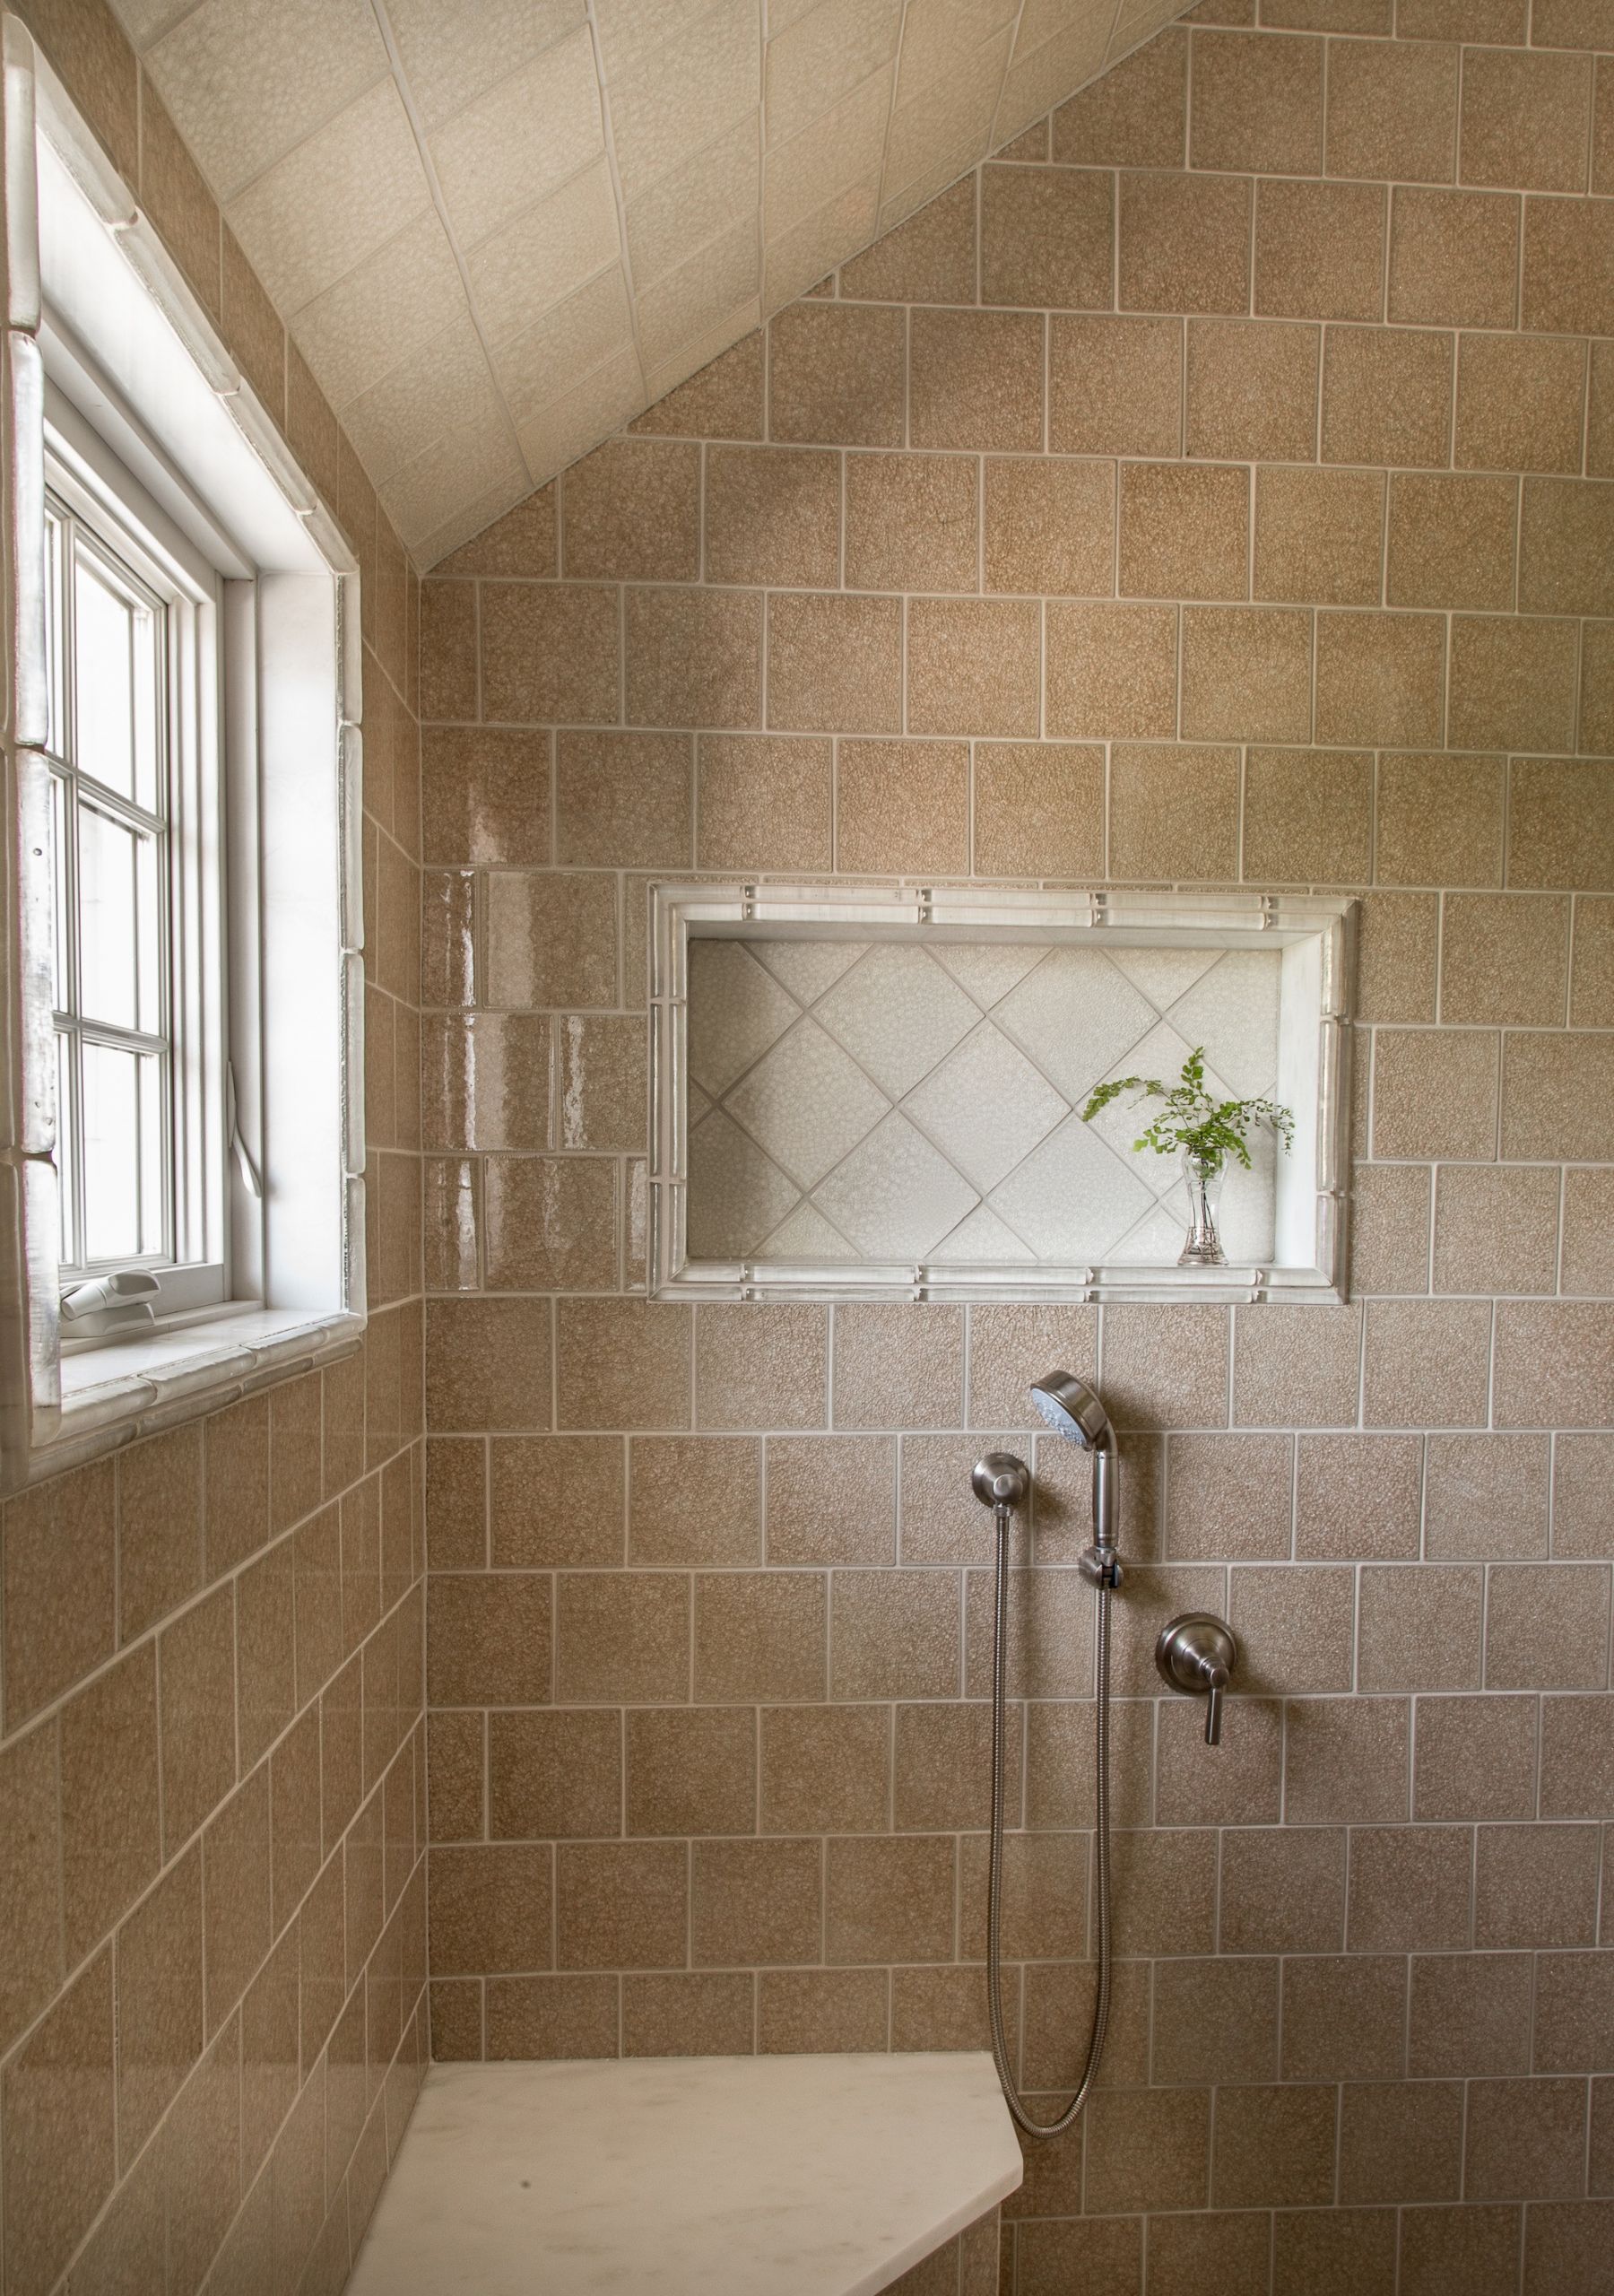 Bathroom Tile Decor
 Top Ten Trends in Tile and Stone Designs